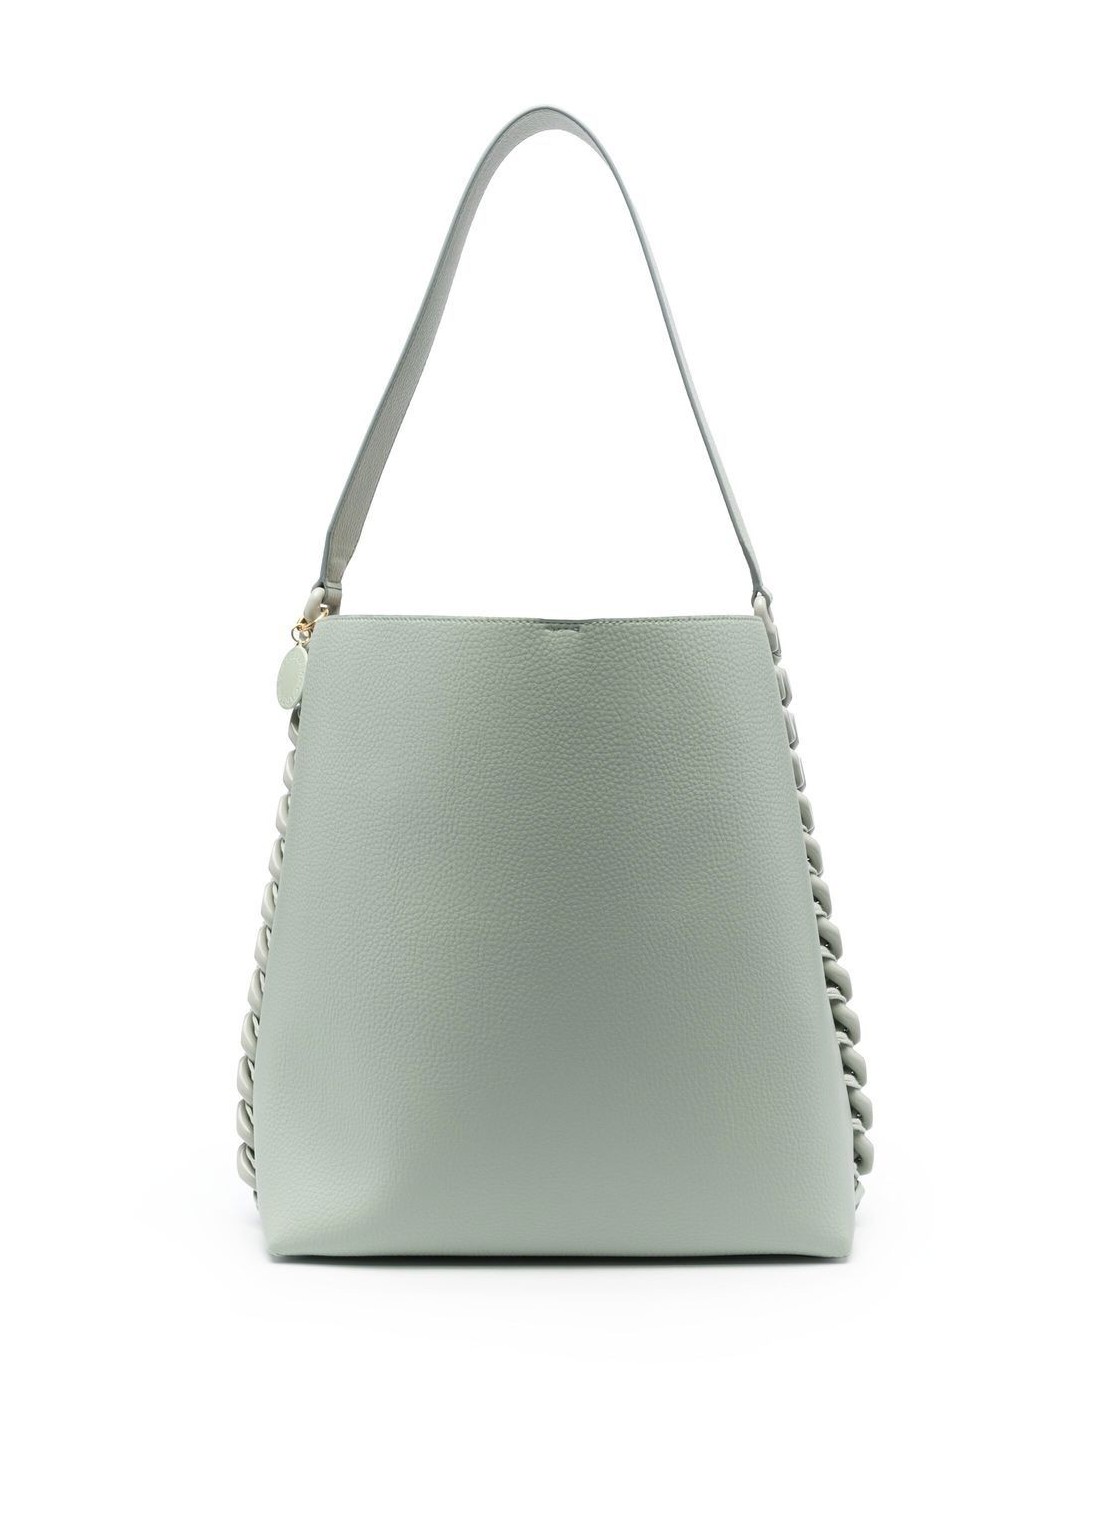 Handbag stella mccartney handbag woman tote bag embossed grainy mat 7b0011wp0065 3900 talla verde
 